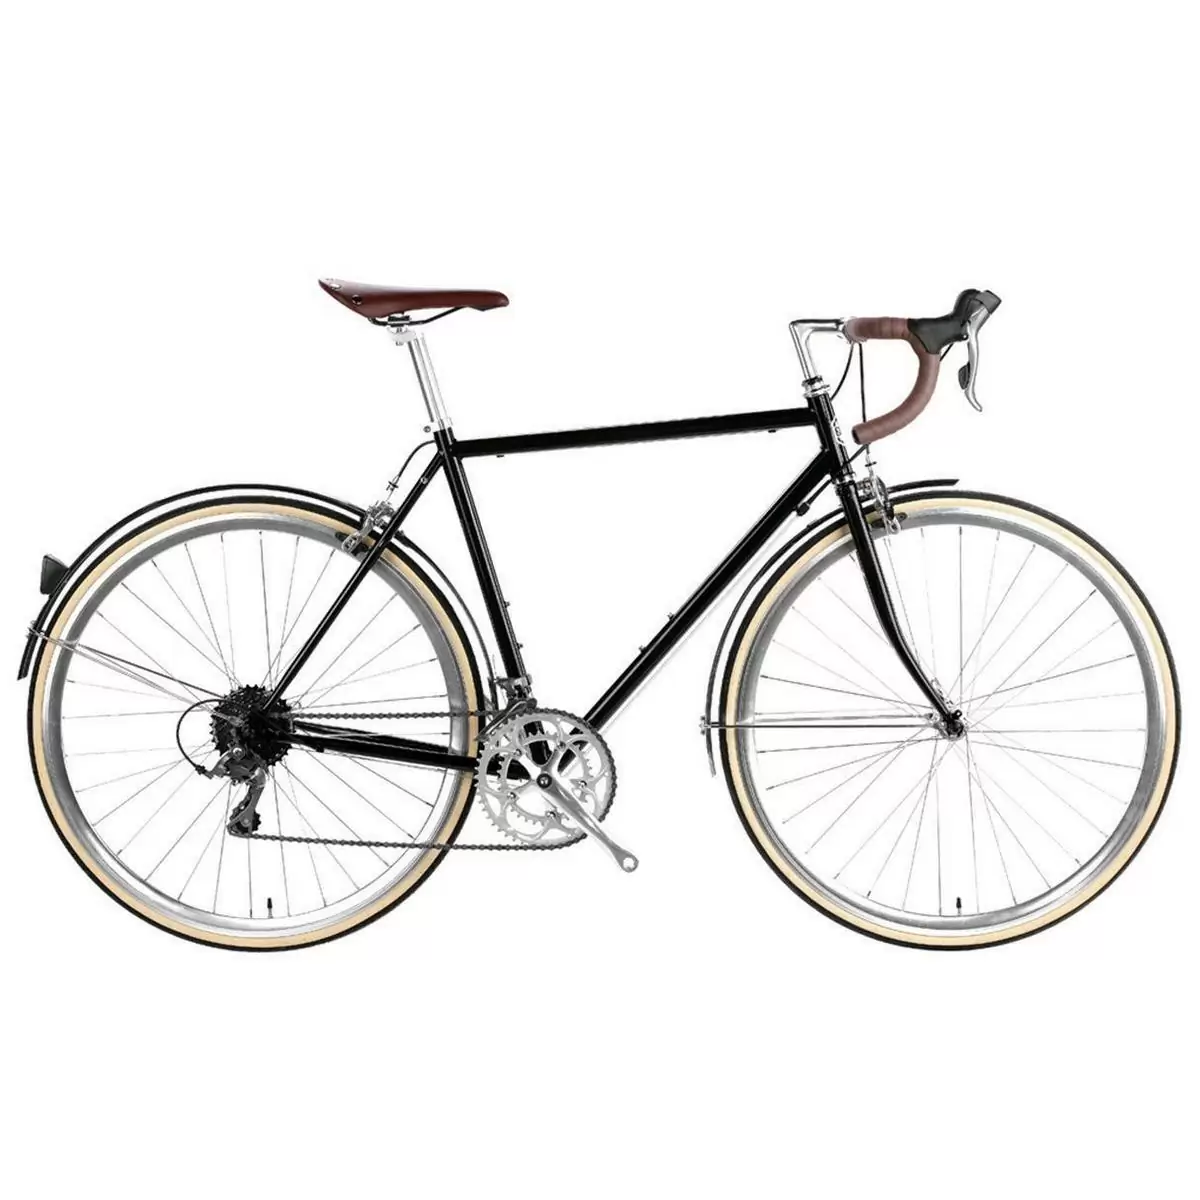 Bicicleta urbana TROY 16spd Del Rey preta grande 58cm - image